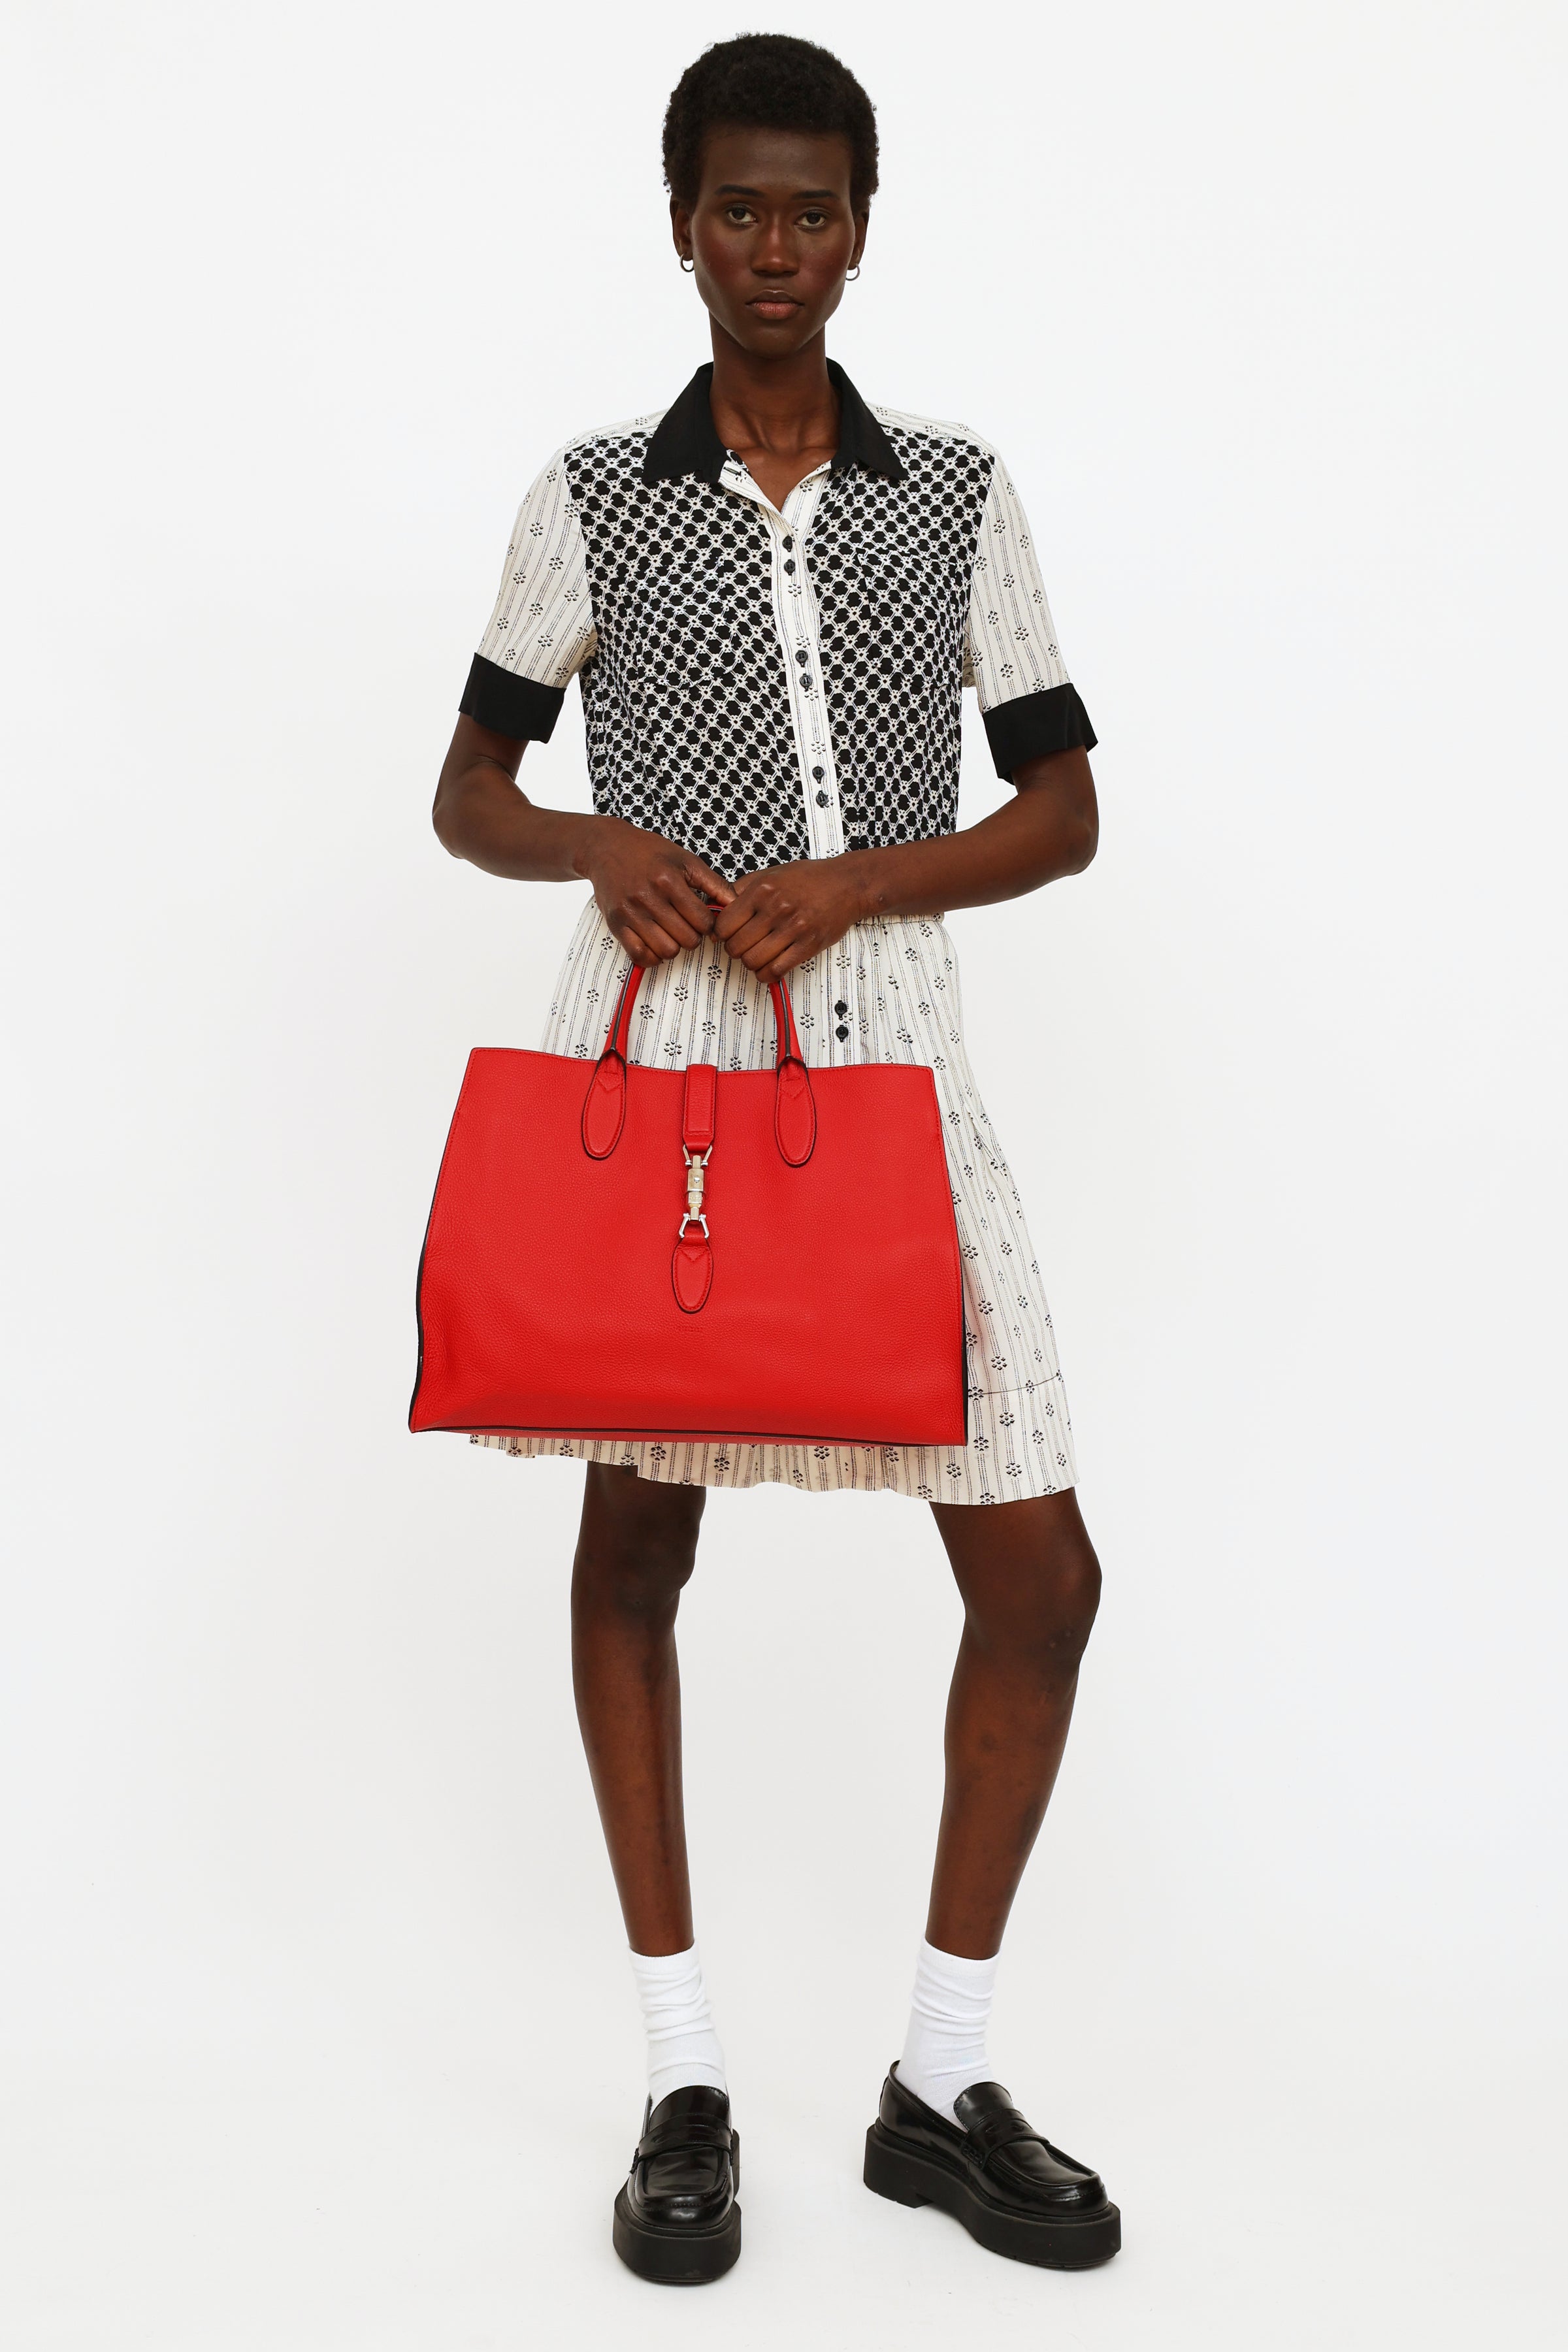 Gucci Medium Soft Jackie Tote - Red Totes, Handbags - GUC1372731